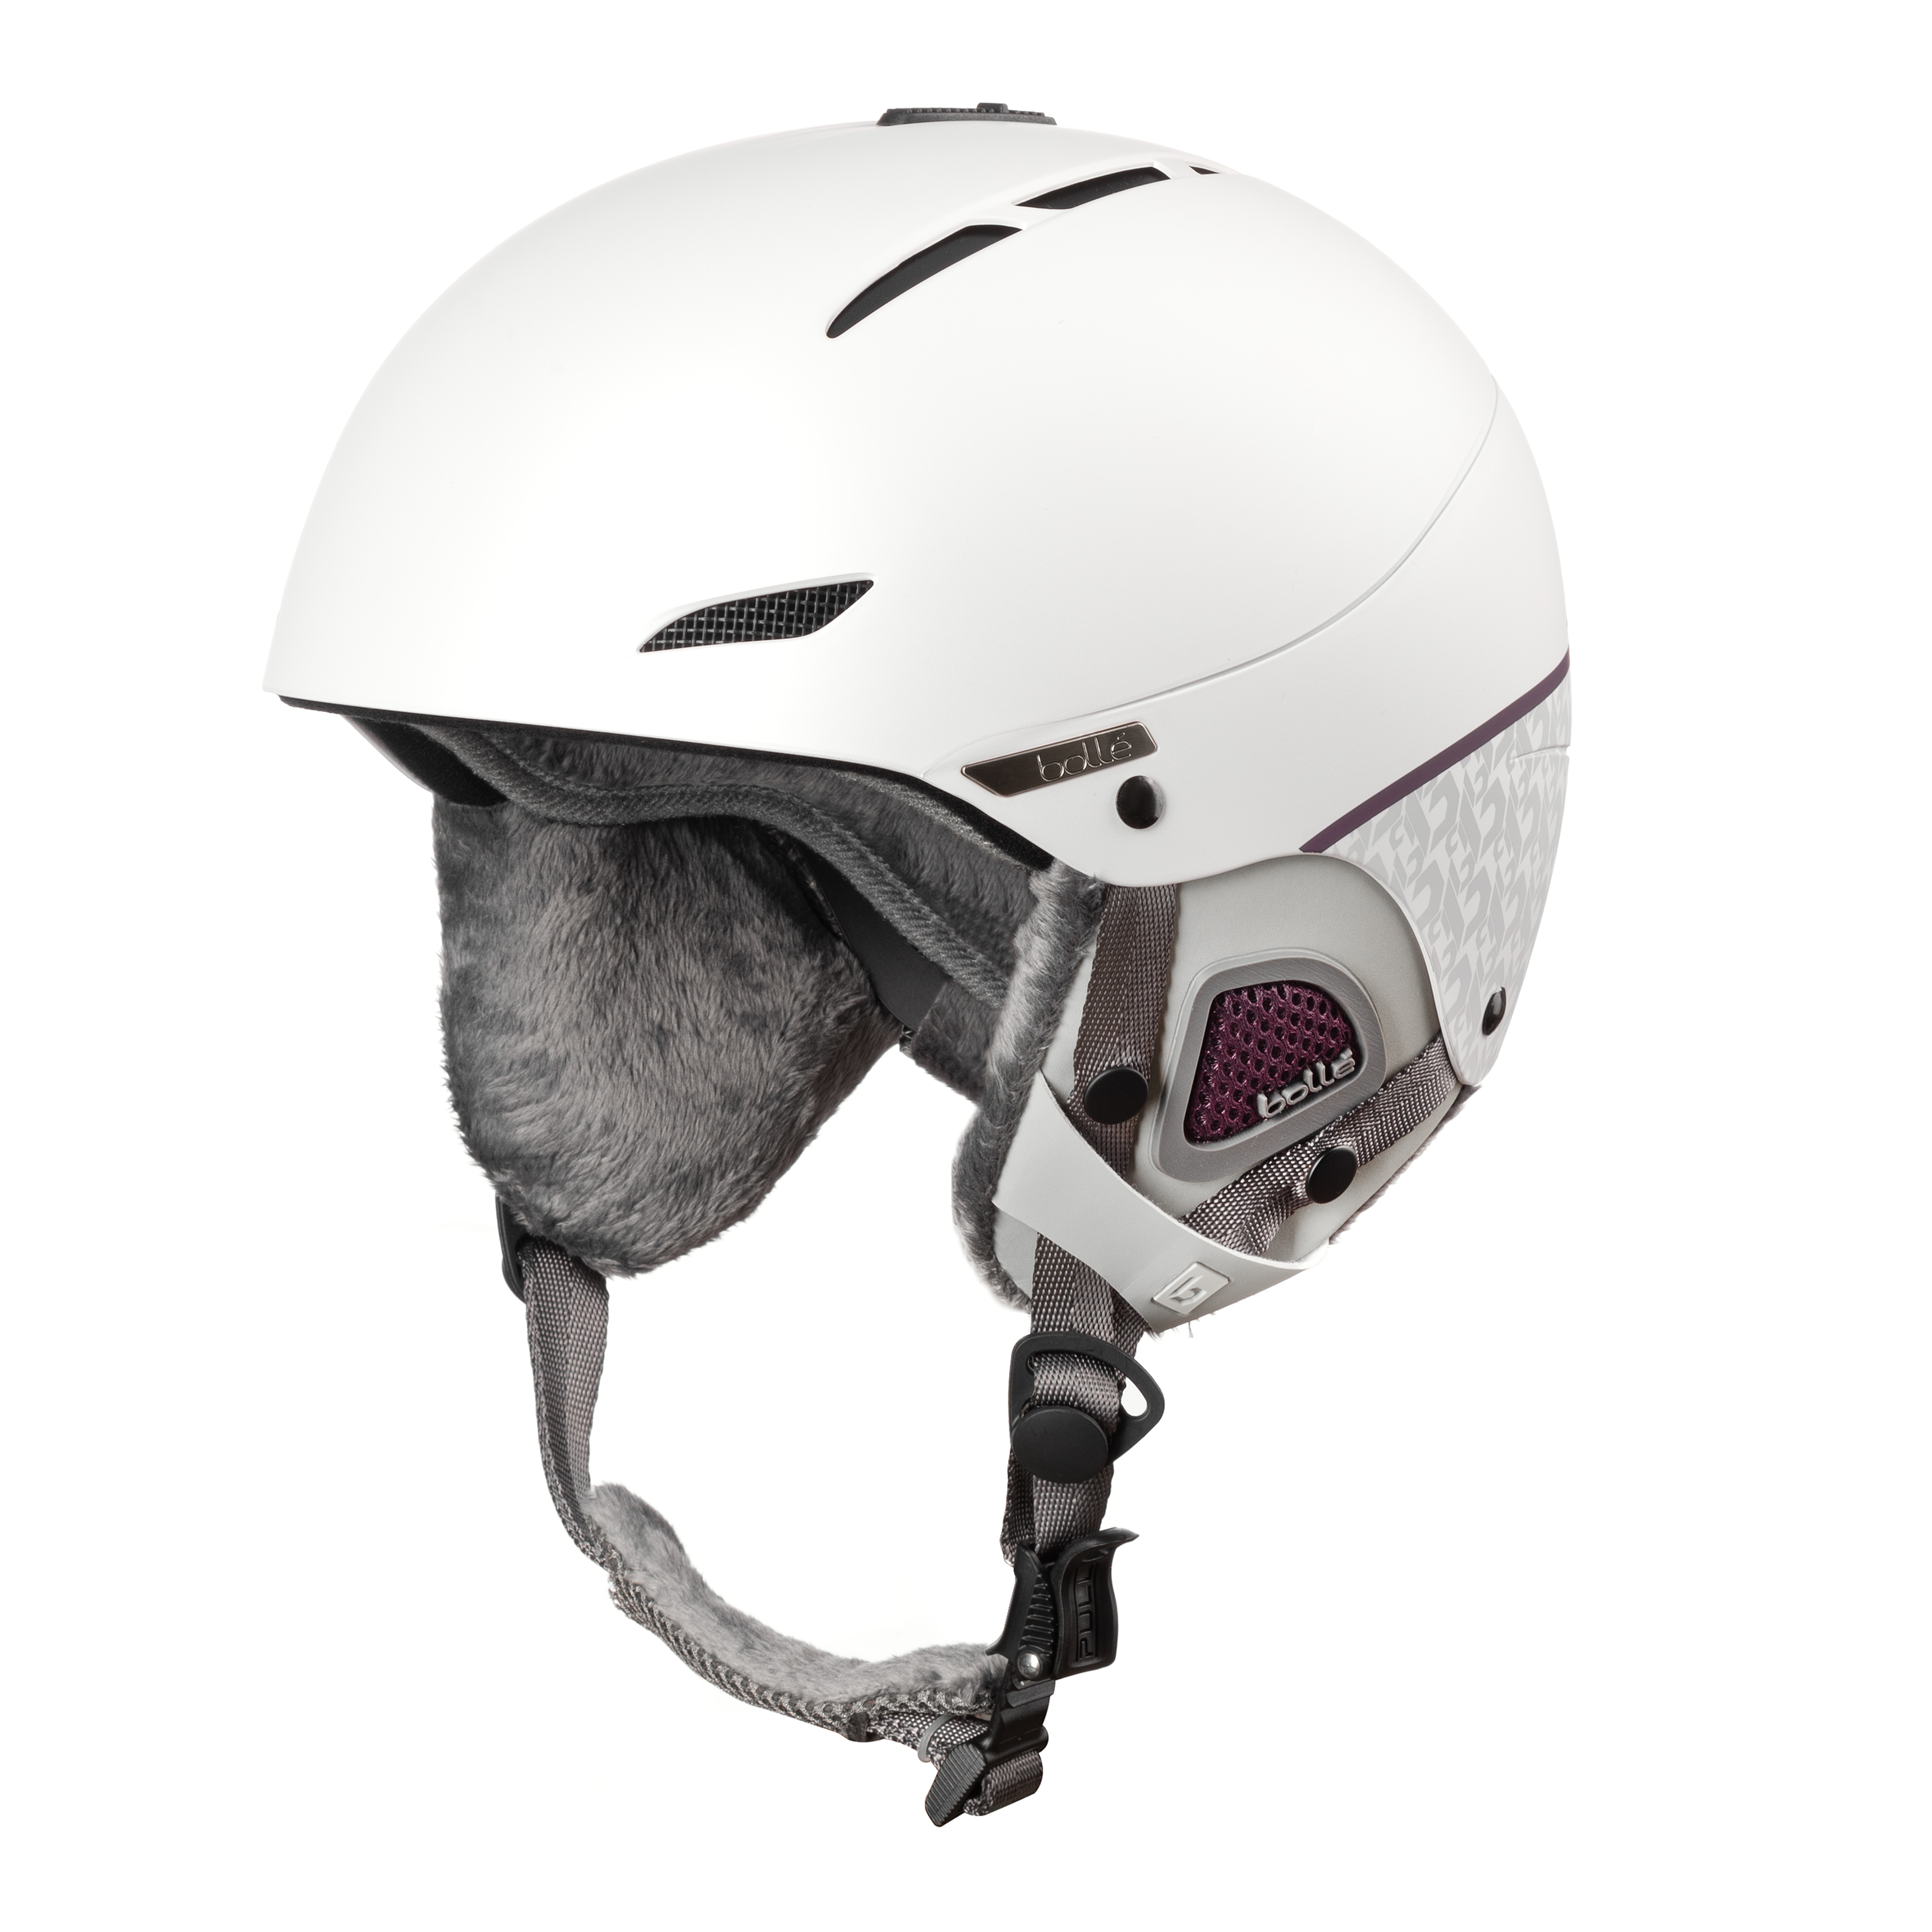 Цена шлем горнолыжный Bolle JULIET White Pearl Matte (M) в Киеве